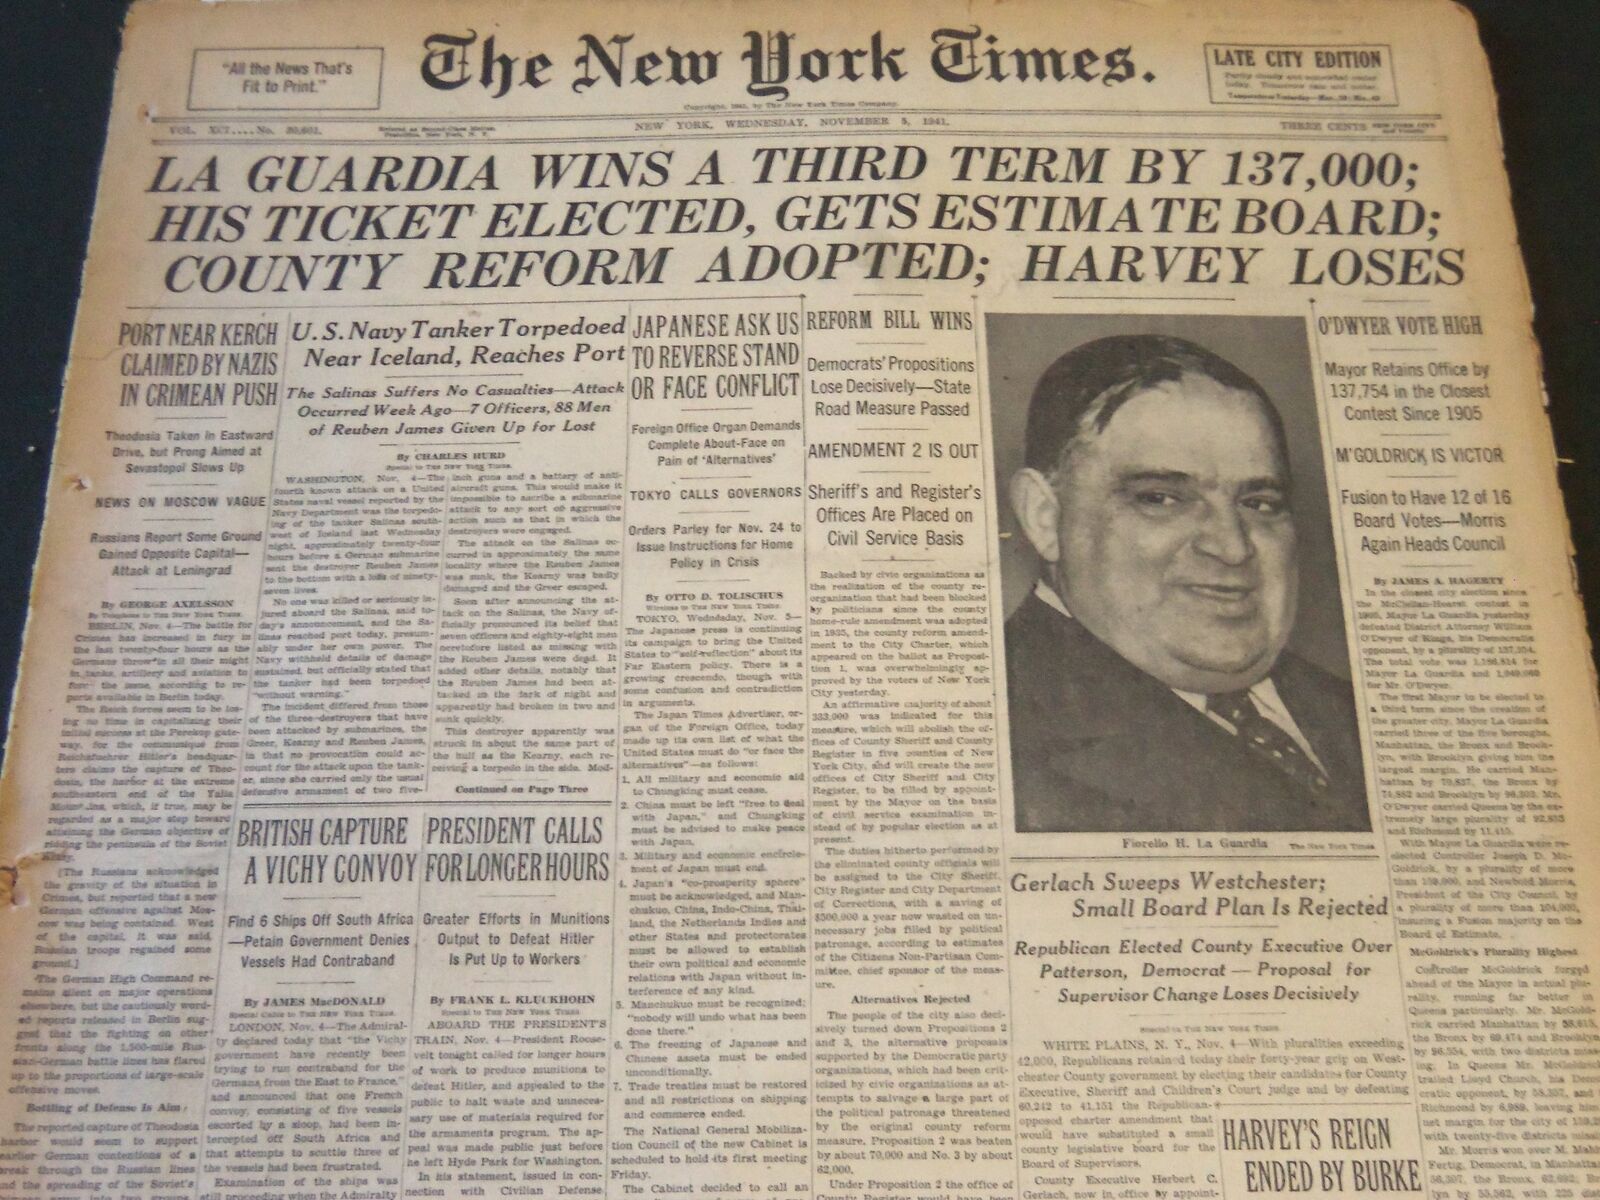 1941 NOV 5 NEW YORK TIMES - LA GUARDIA WINS A THIRD TERM BY 137,000 - NT 6314